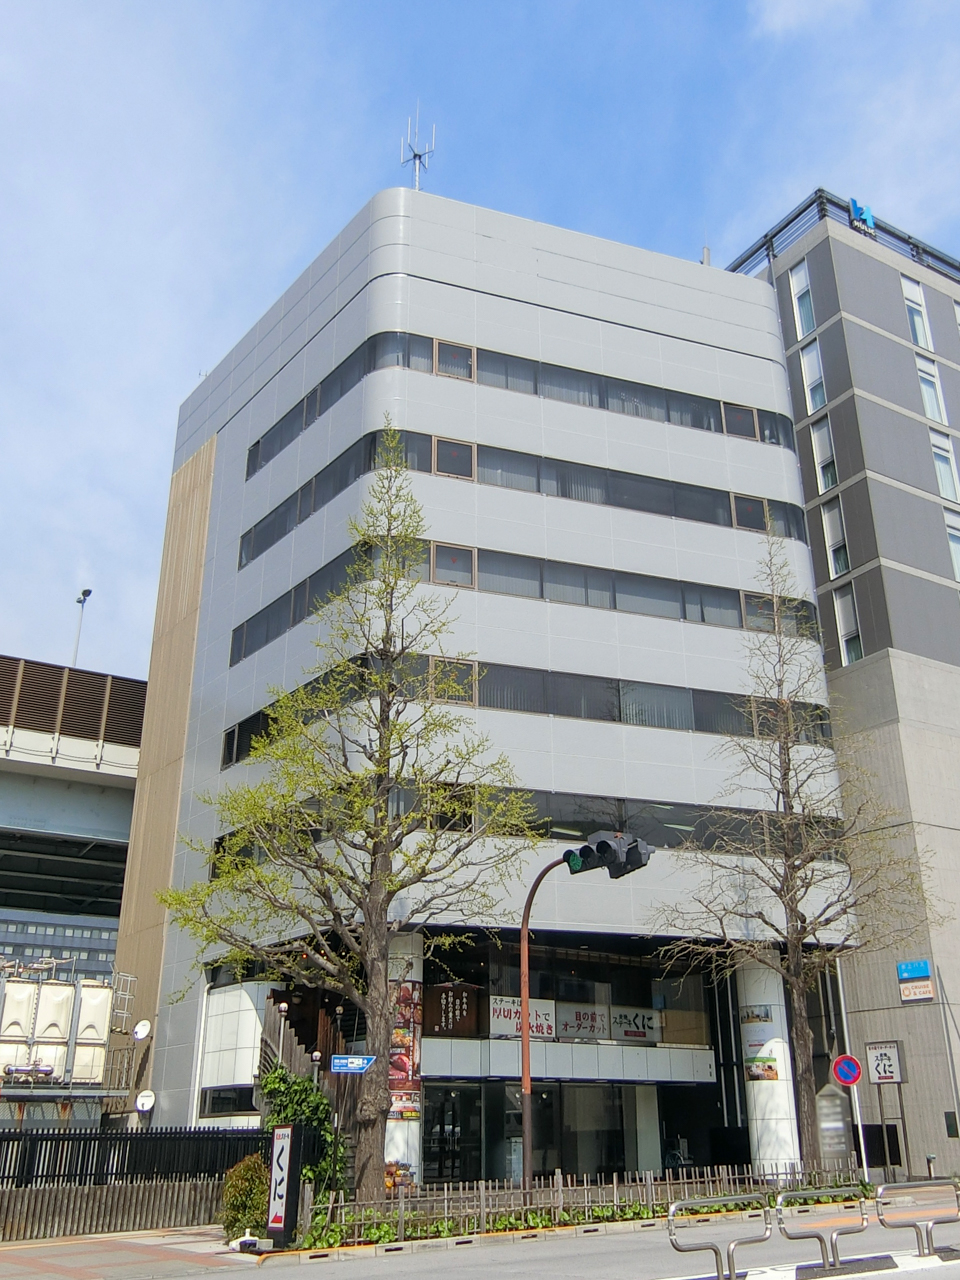 Ryogoku Gai Building, in front of the Kokugikan Sumo Hall